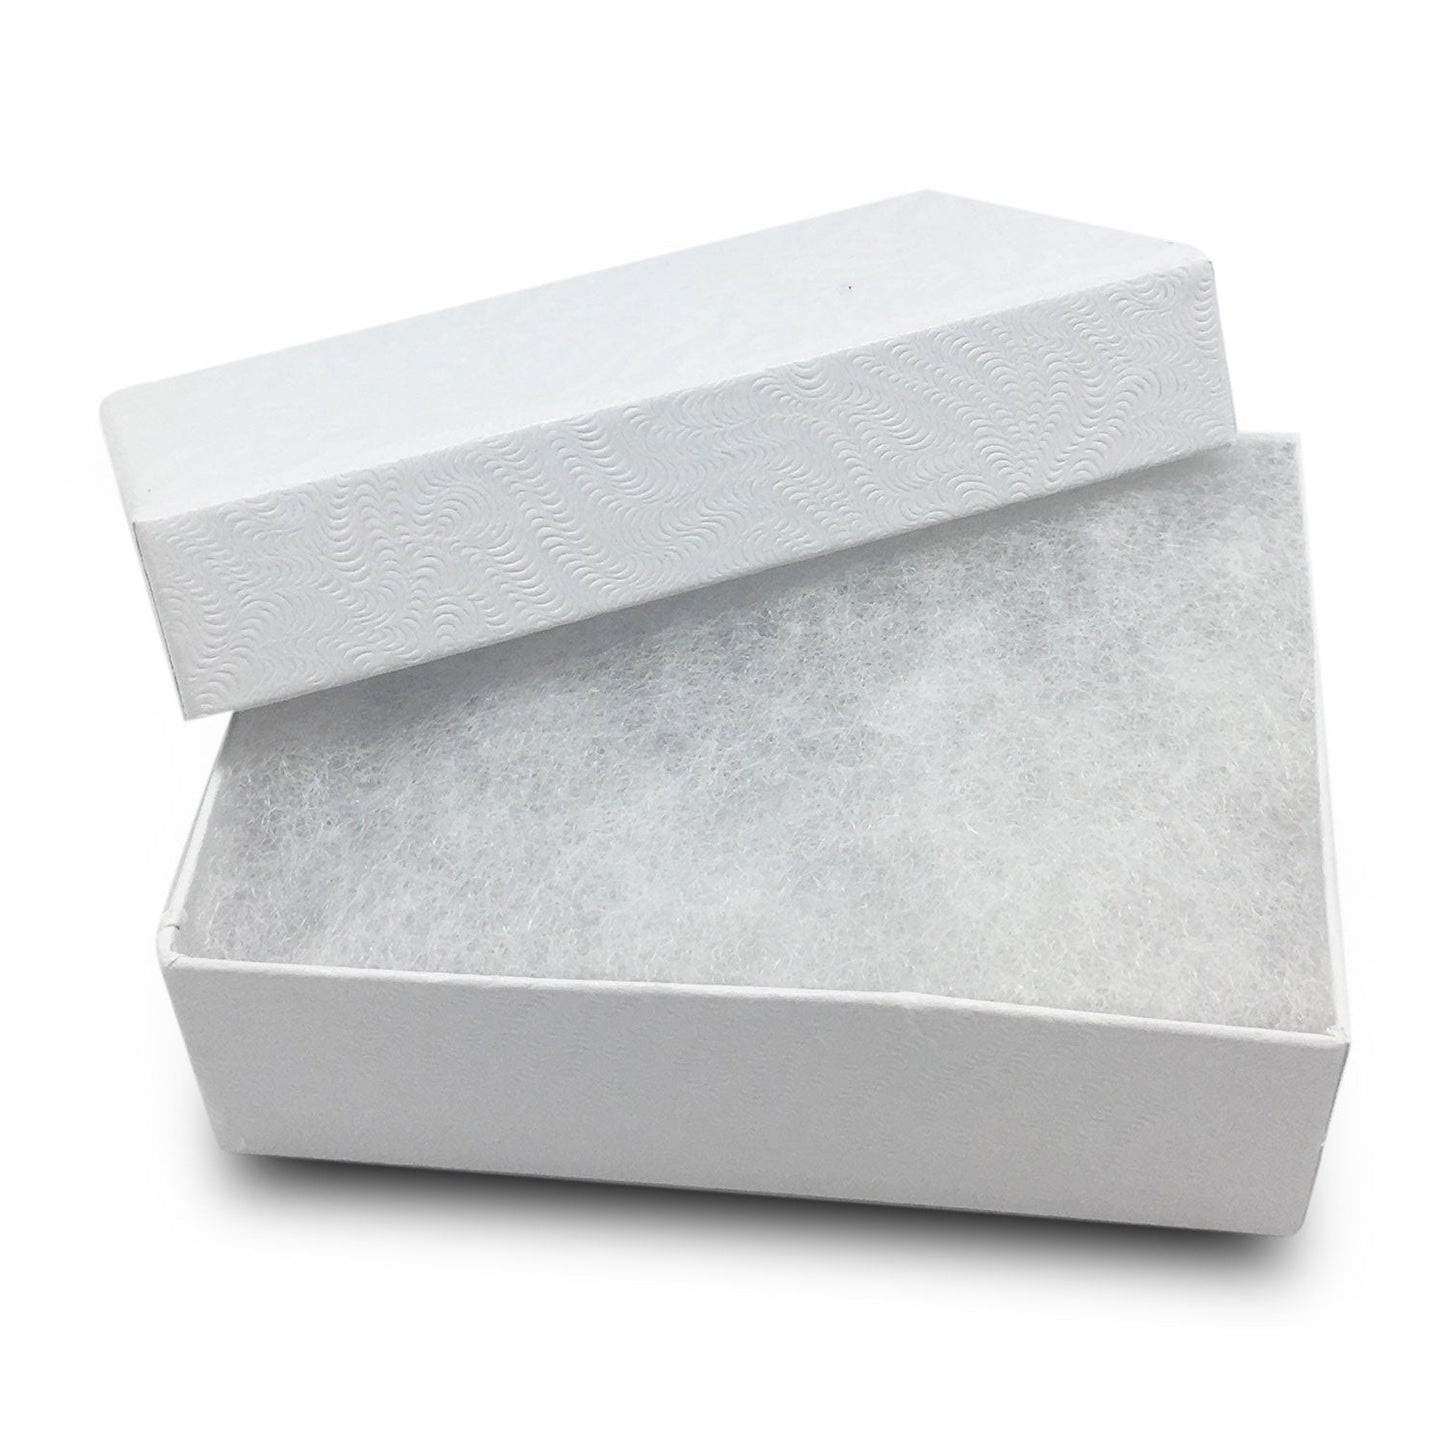 #32 - 3 1/4" x 2 1/4" x 1"H White Swirl Cotton Filled Paper Box